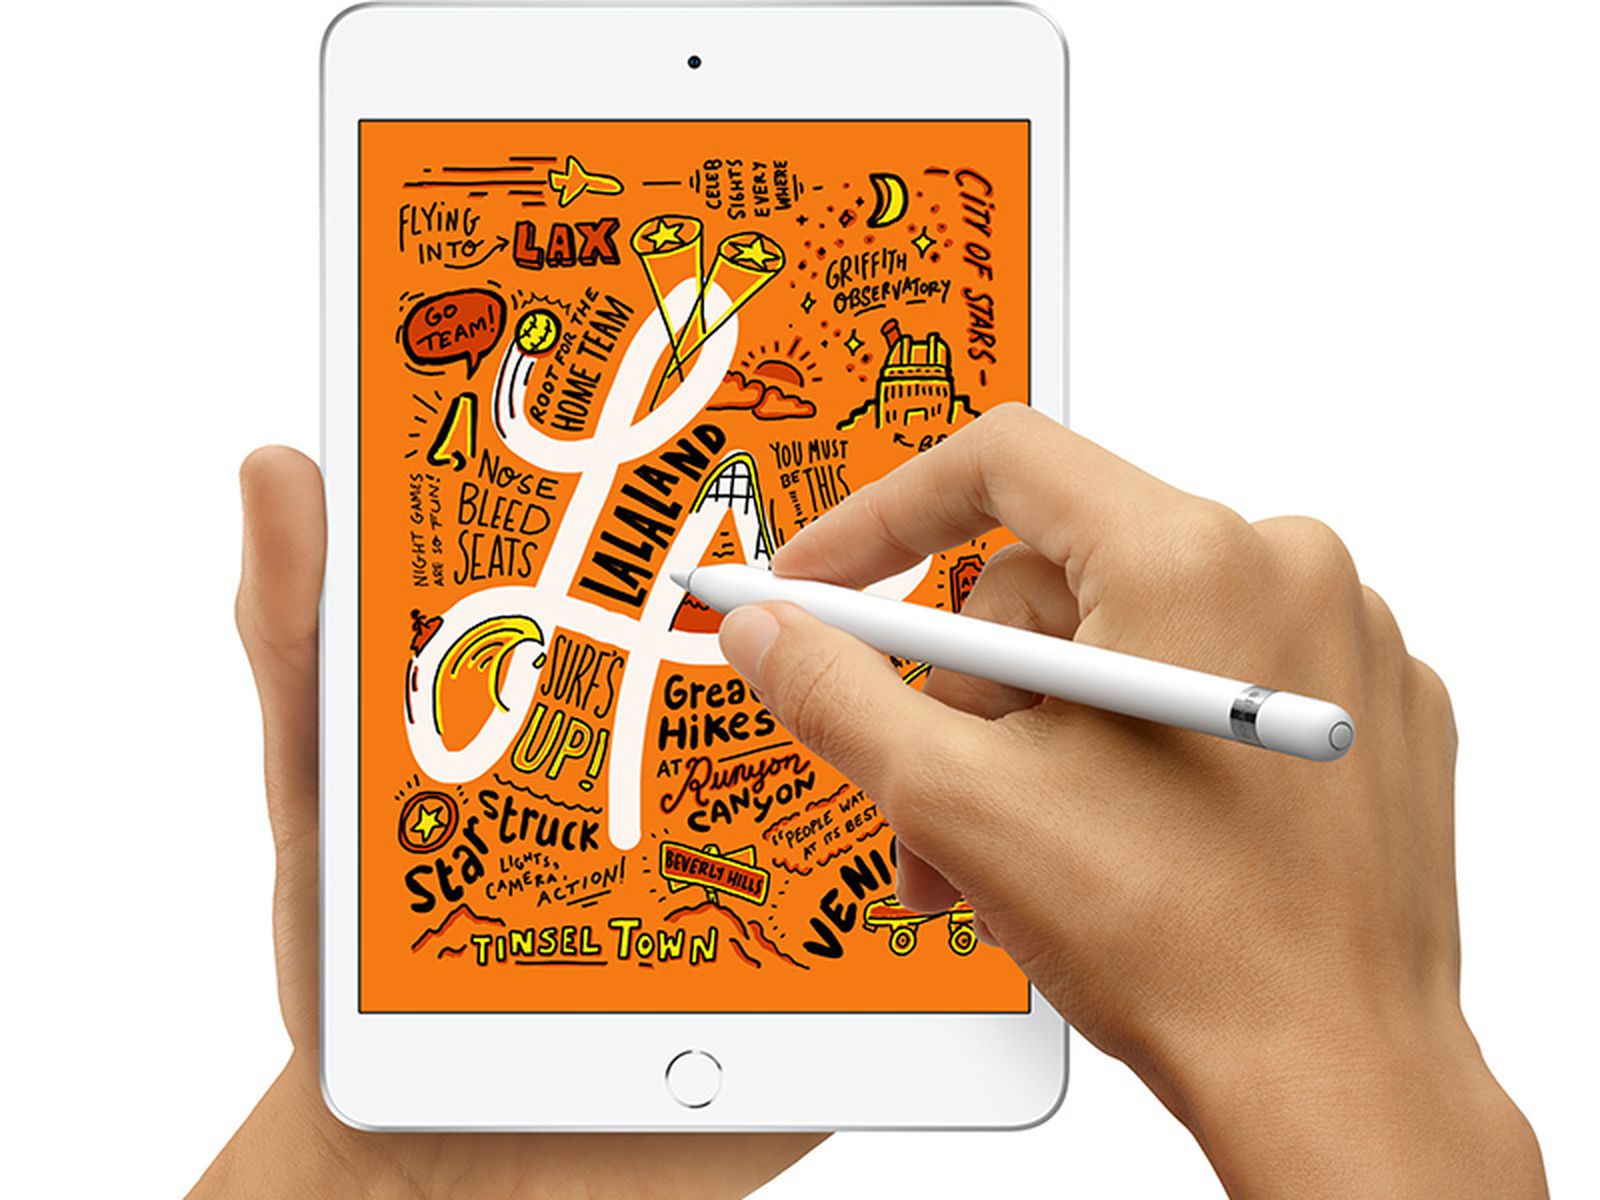 The 4 best USB-C Apple Pencil alternatives for the 10th-gen iPad